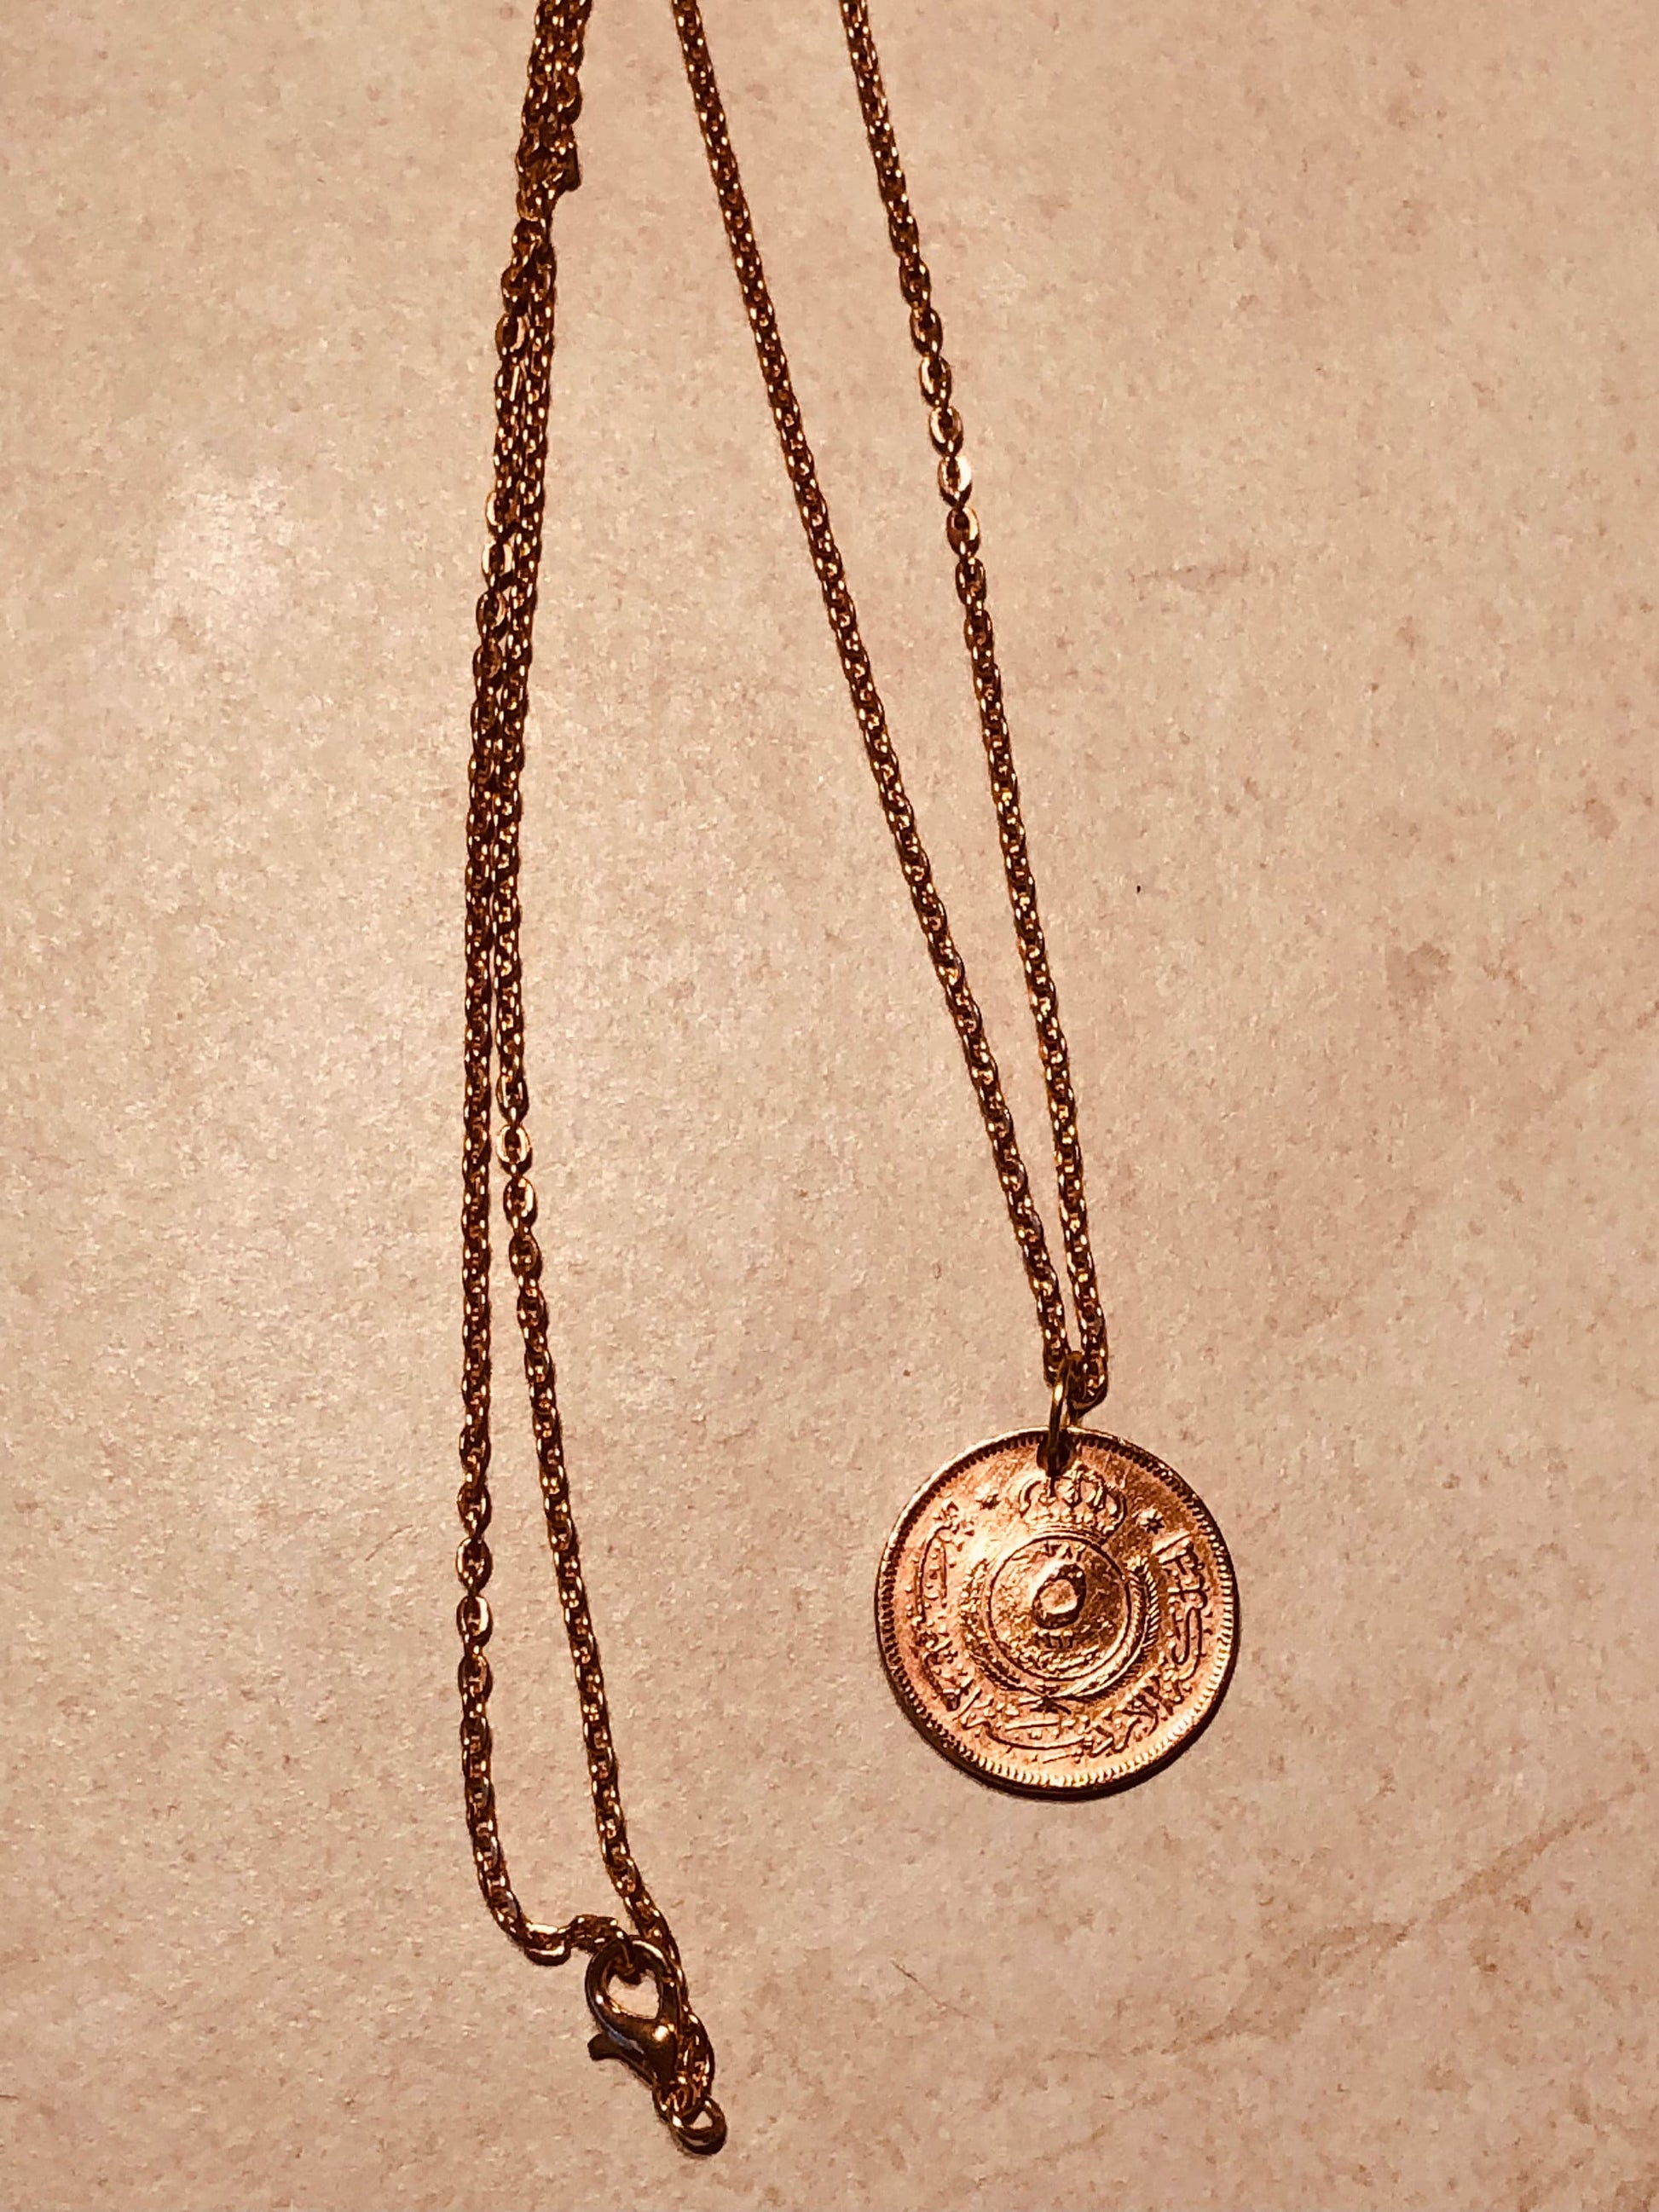 Jordan Coin Necklace Kingdom of Jordan 5 Fils Coin Pendant Vintage Necklace Custom Made Rare coins - Coin Enthusiast - Fashion Accessory